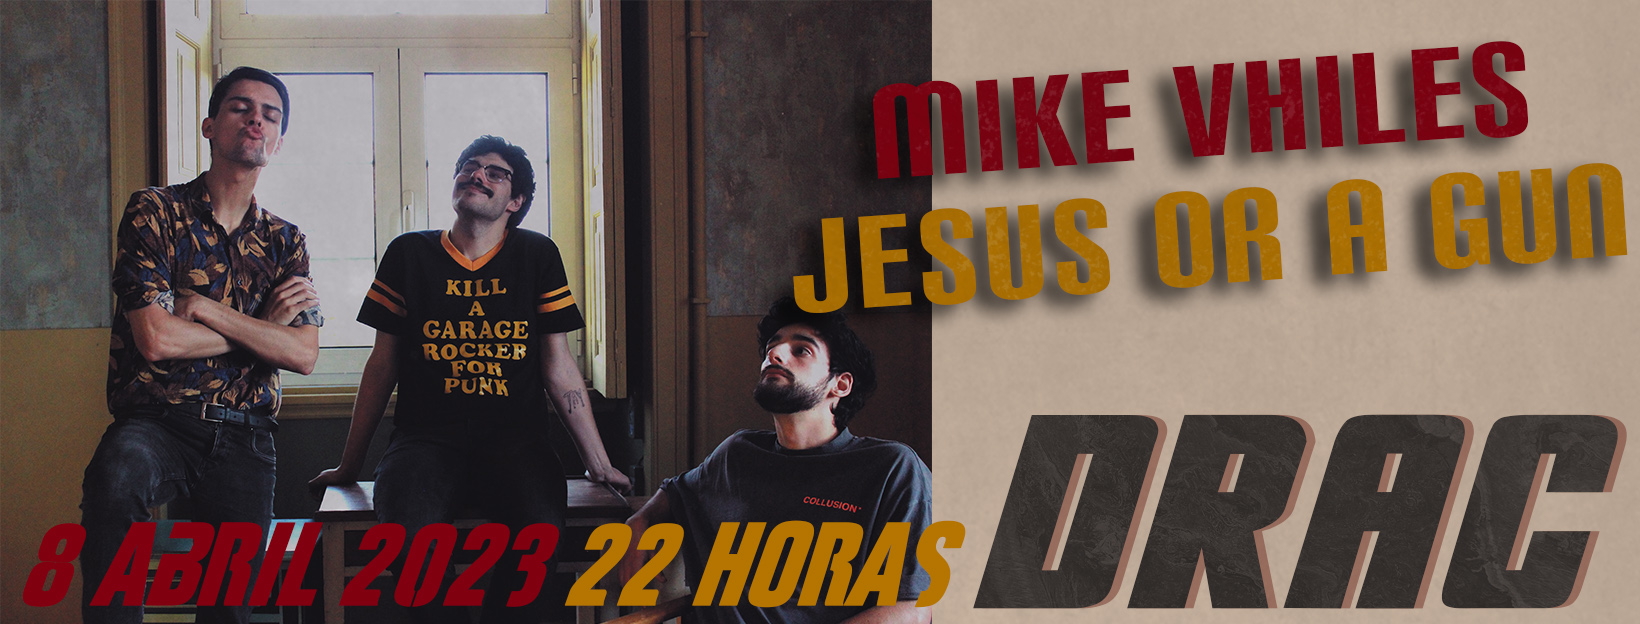 MIKE VHILES + JESUS OR A GUN